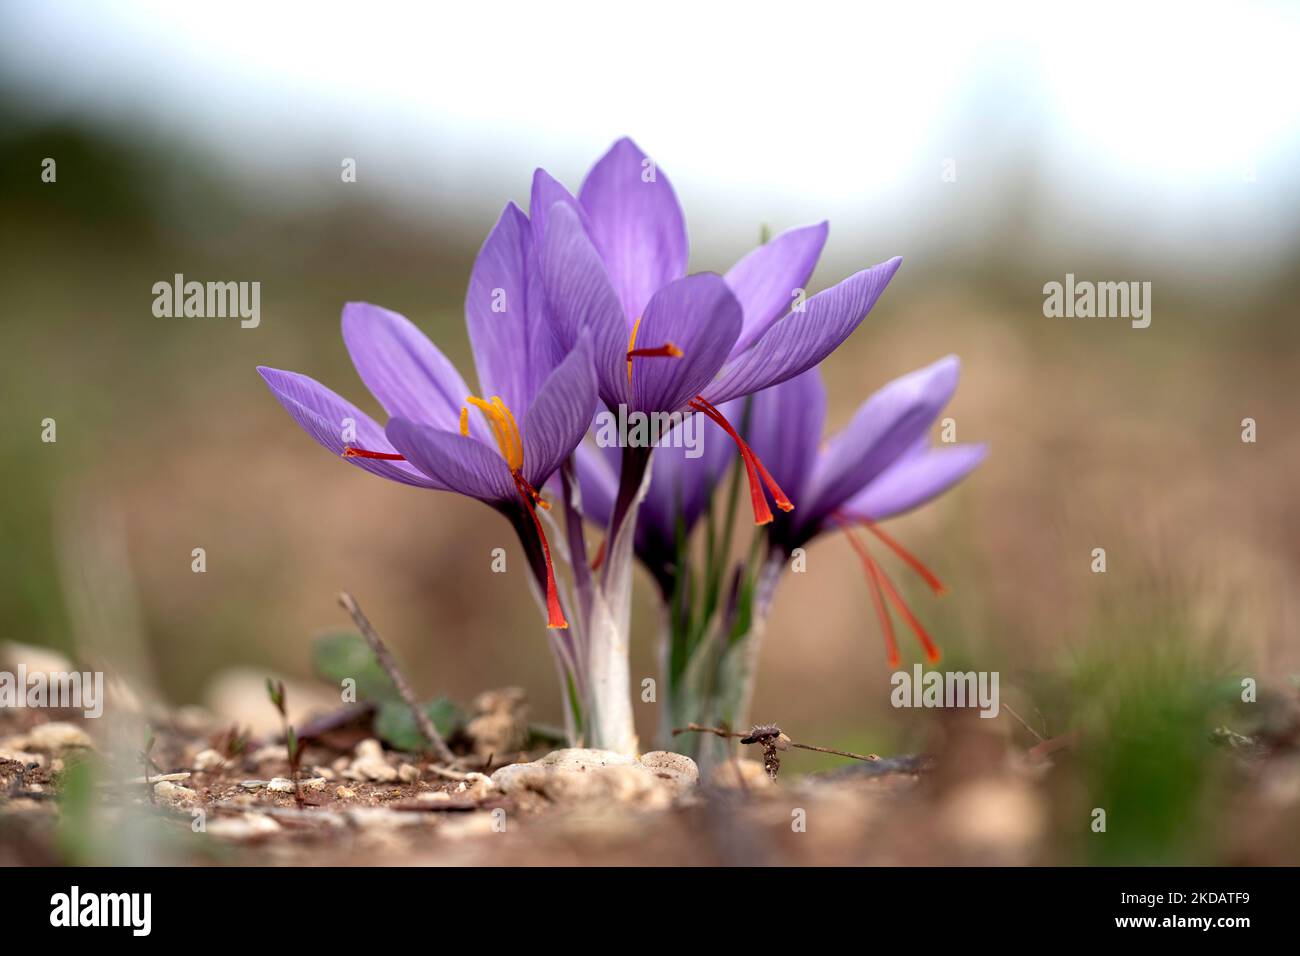 Closeup of Saffron flowers in a field. Crocus sativus, saffron crocus, delicate saffron petals. Saffron crocus flowers Stock Photo